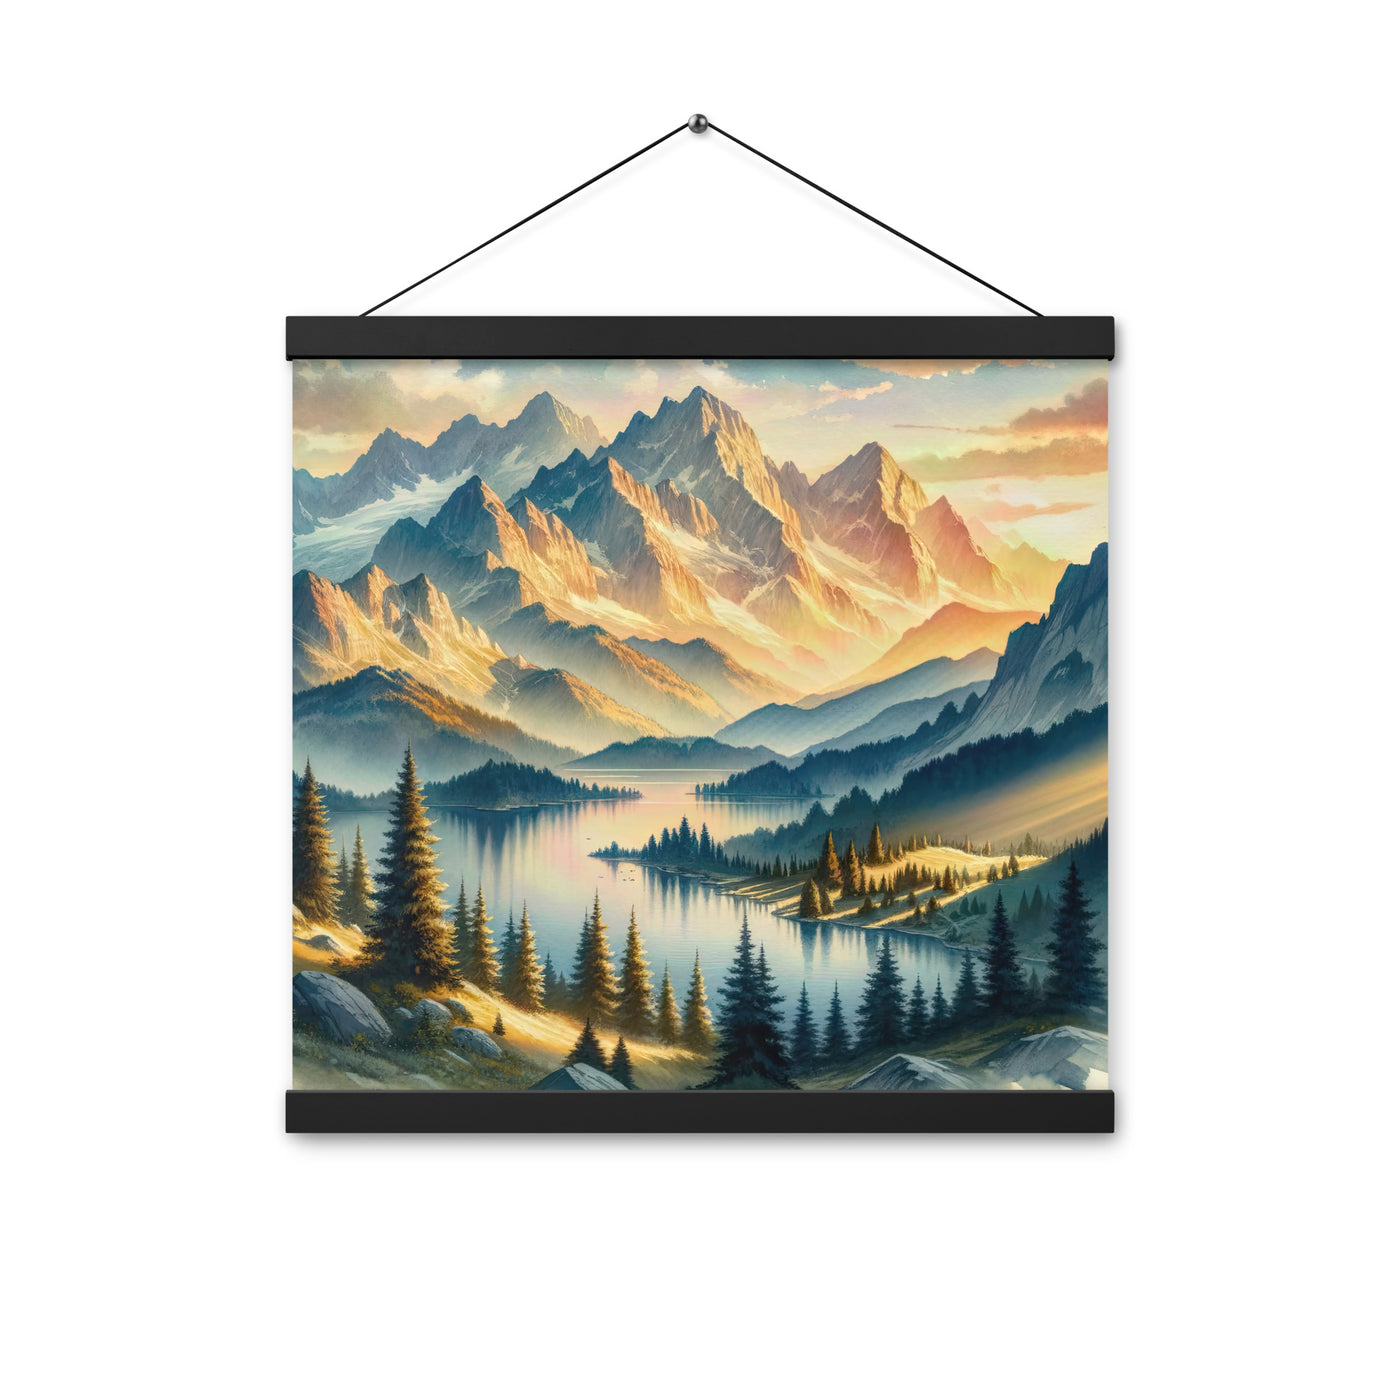 Aquarell der Alpenpracht bei Sonnenuntergang, Berge im goldenen Licht - Premium Poster mit Aufhängung berge xxx yyy zzz 40.6 x 40.6 cm